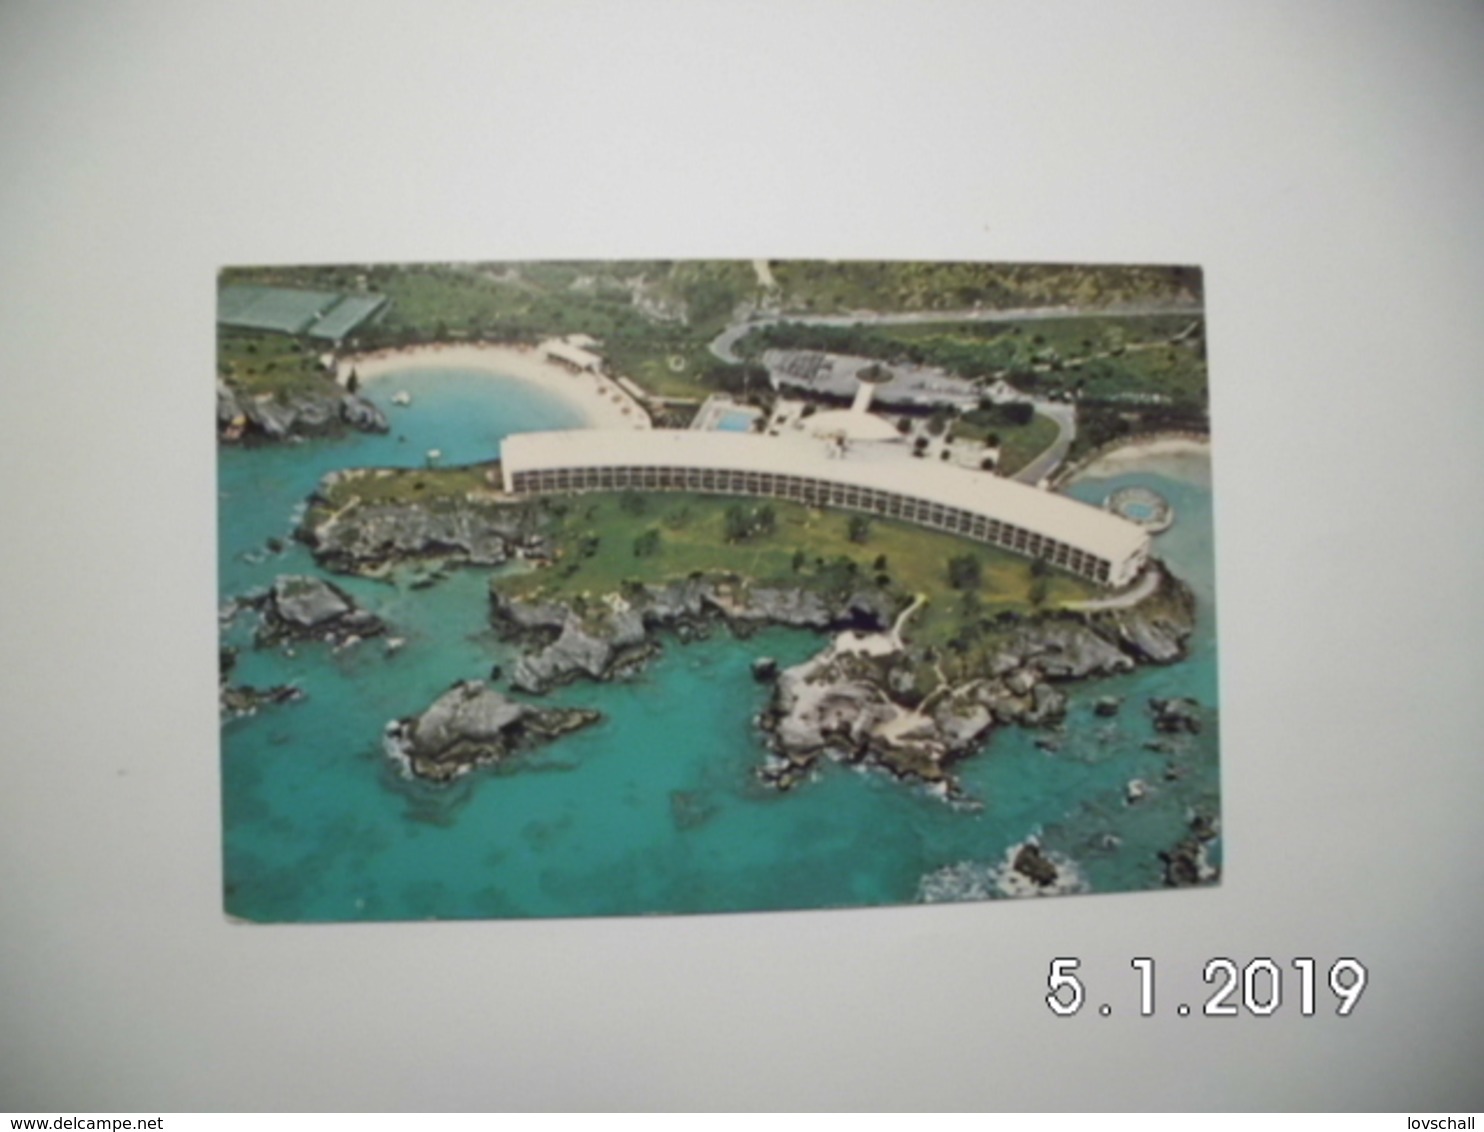 Bermuda. - Sonesta Beach Hotel. (31 - 1 - 1980) - Bermuda